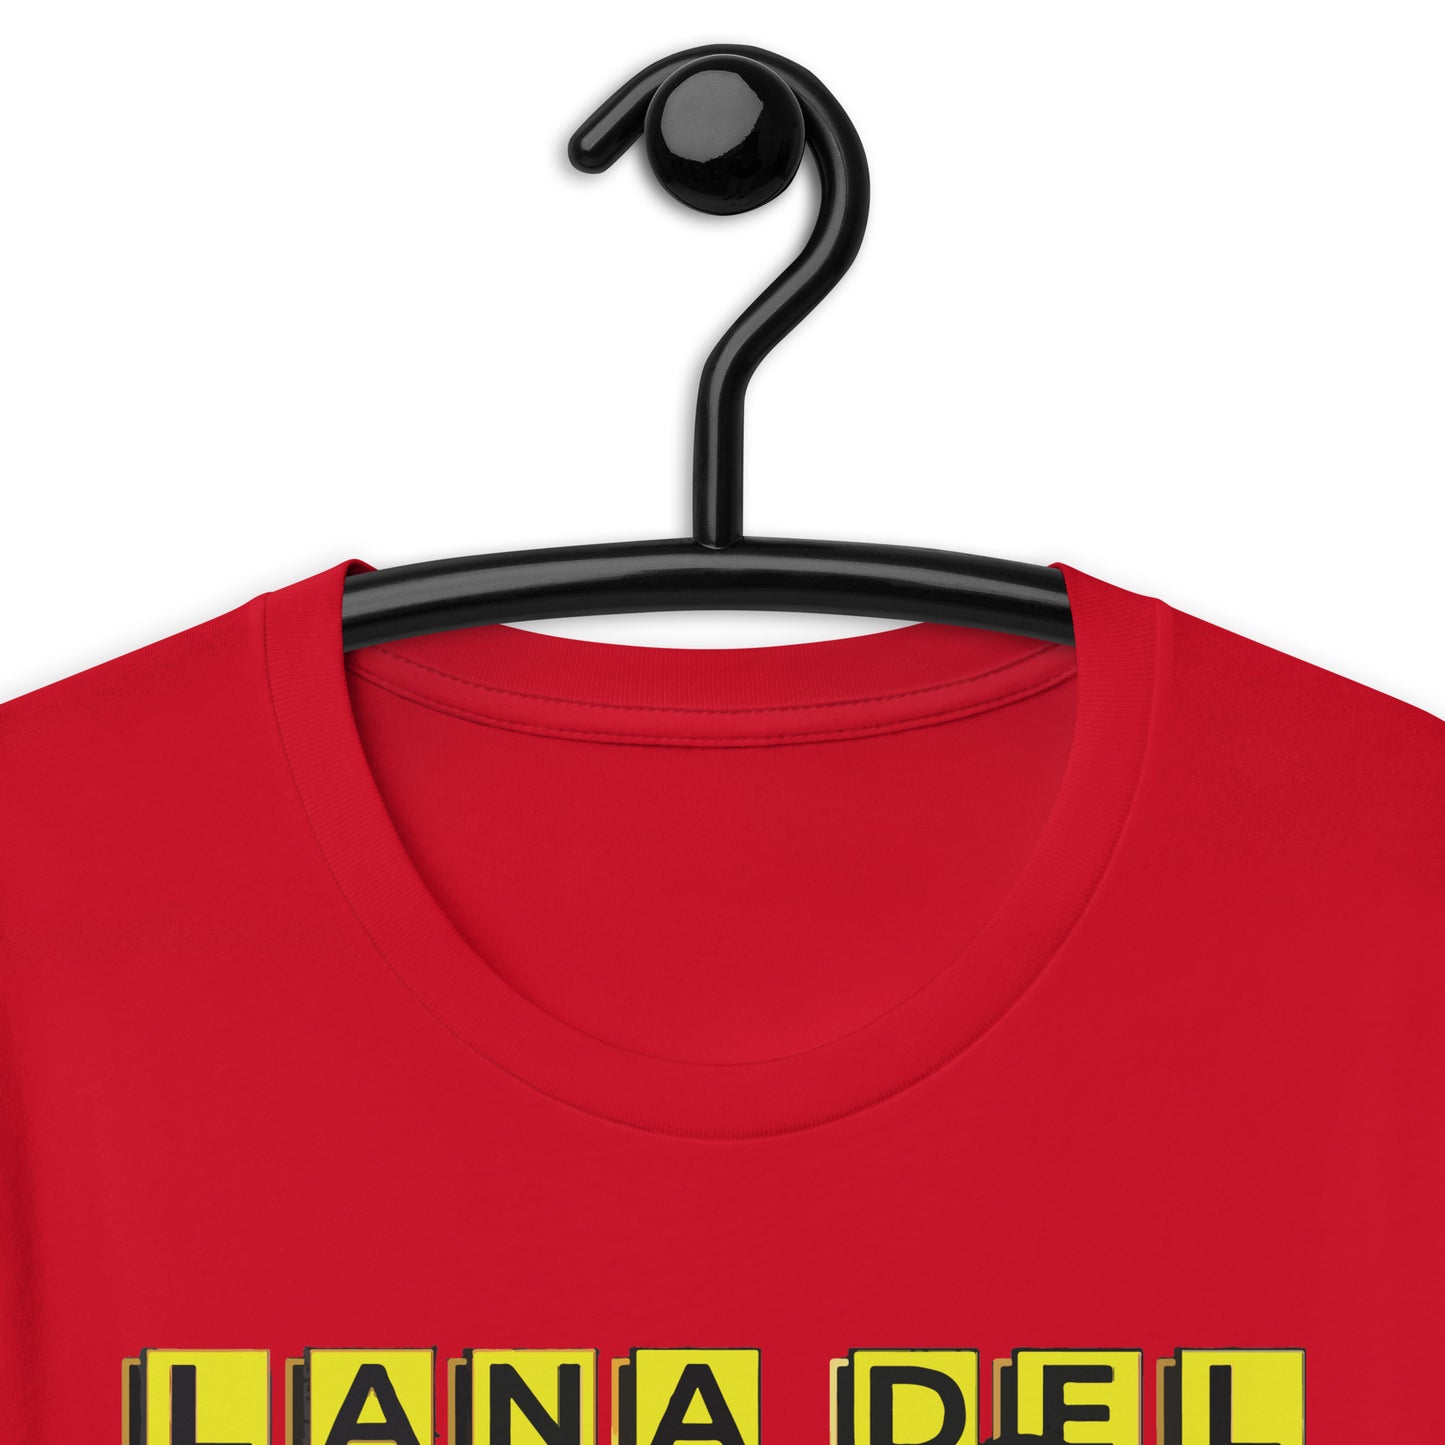 La de Lana Del Rey. Camiseta unisex